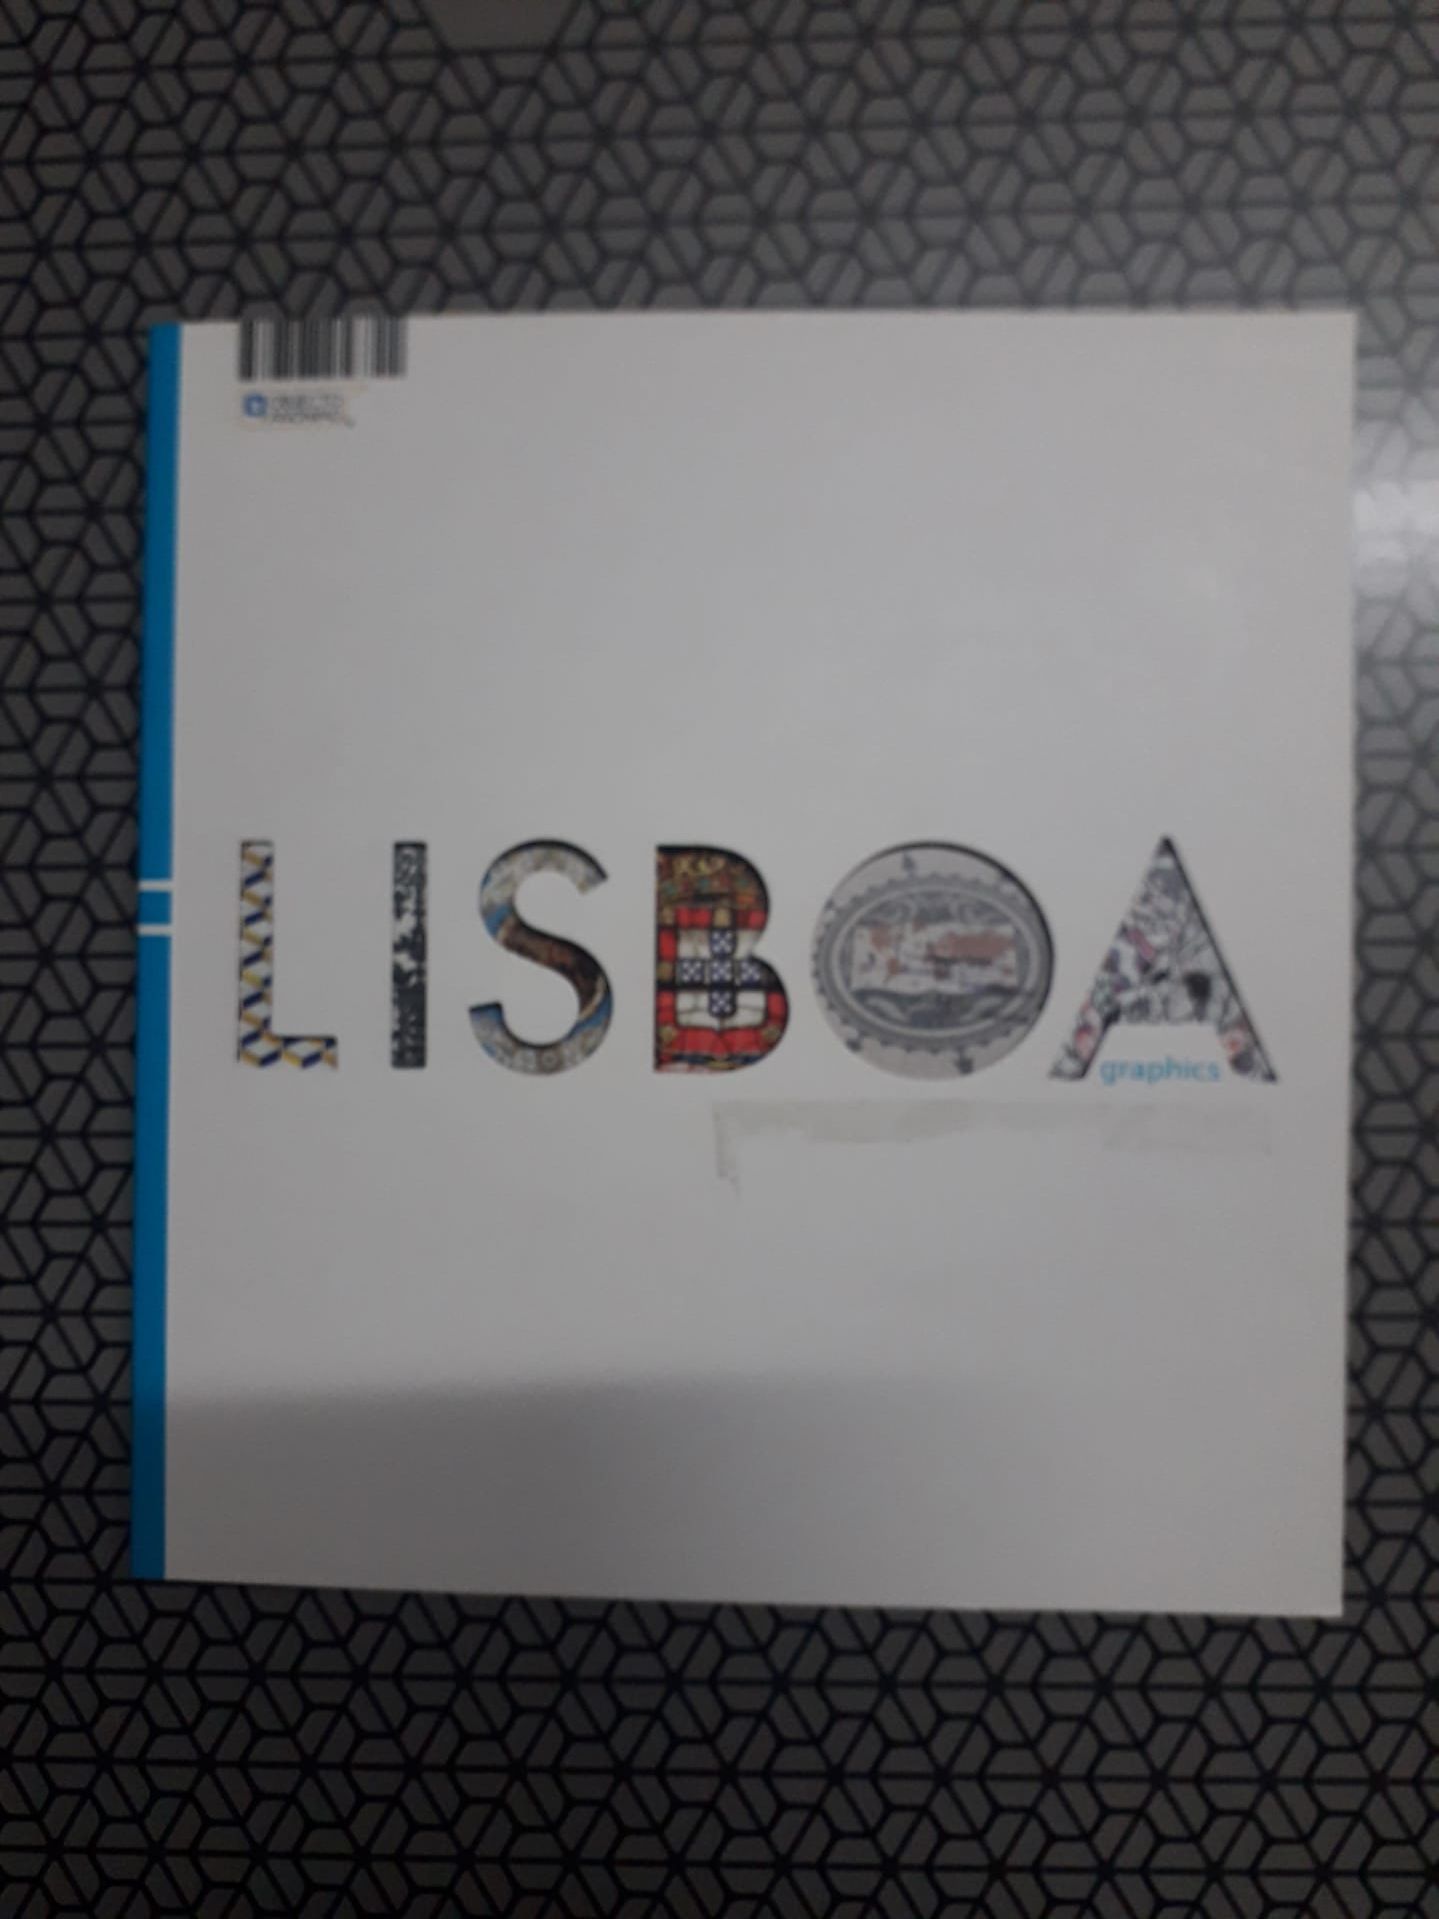 Lisboa graphics - Livro novo